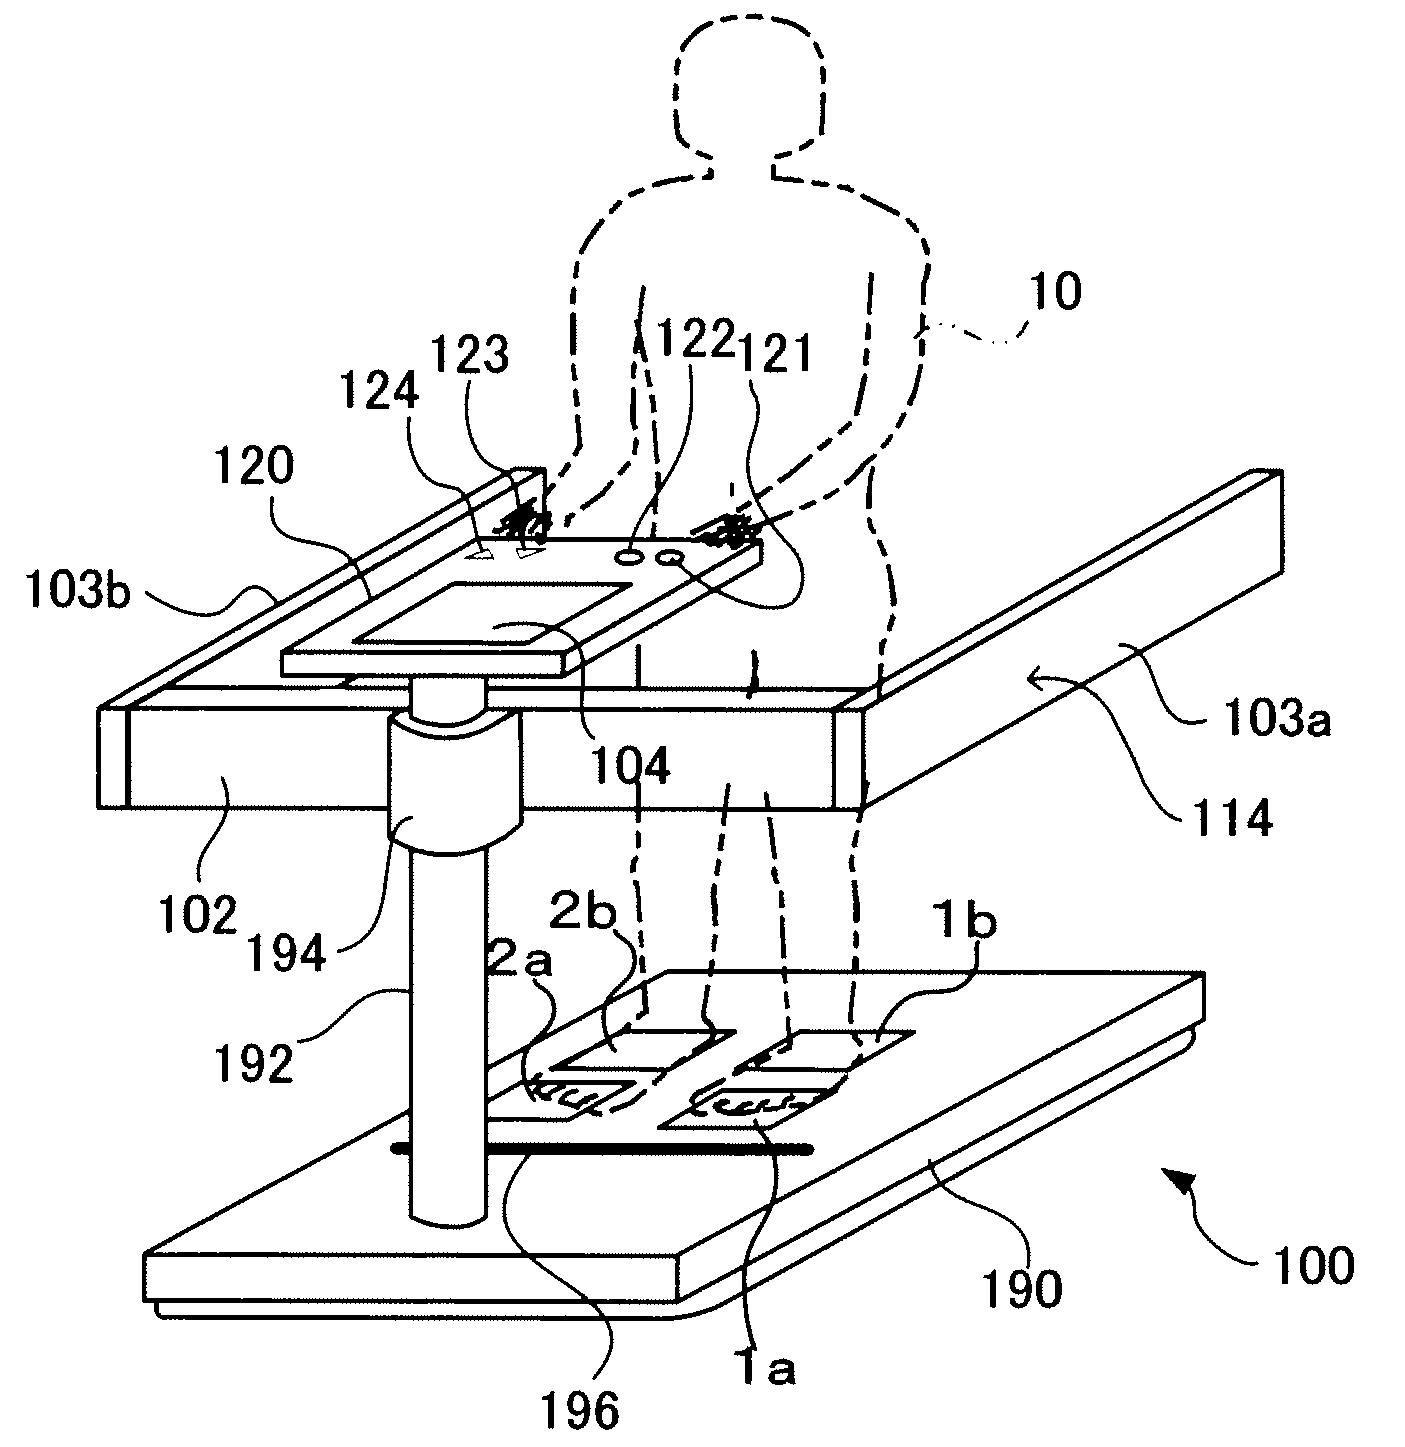 Body composition measuring apparatus